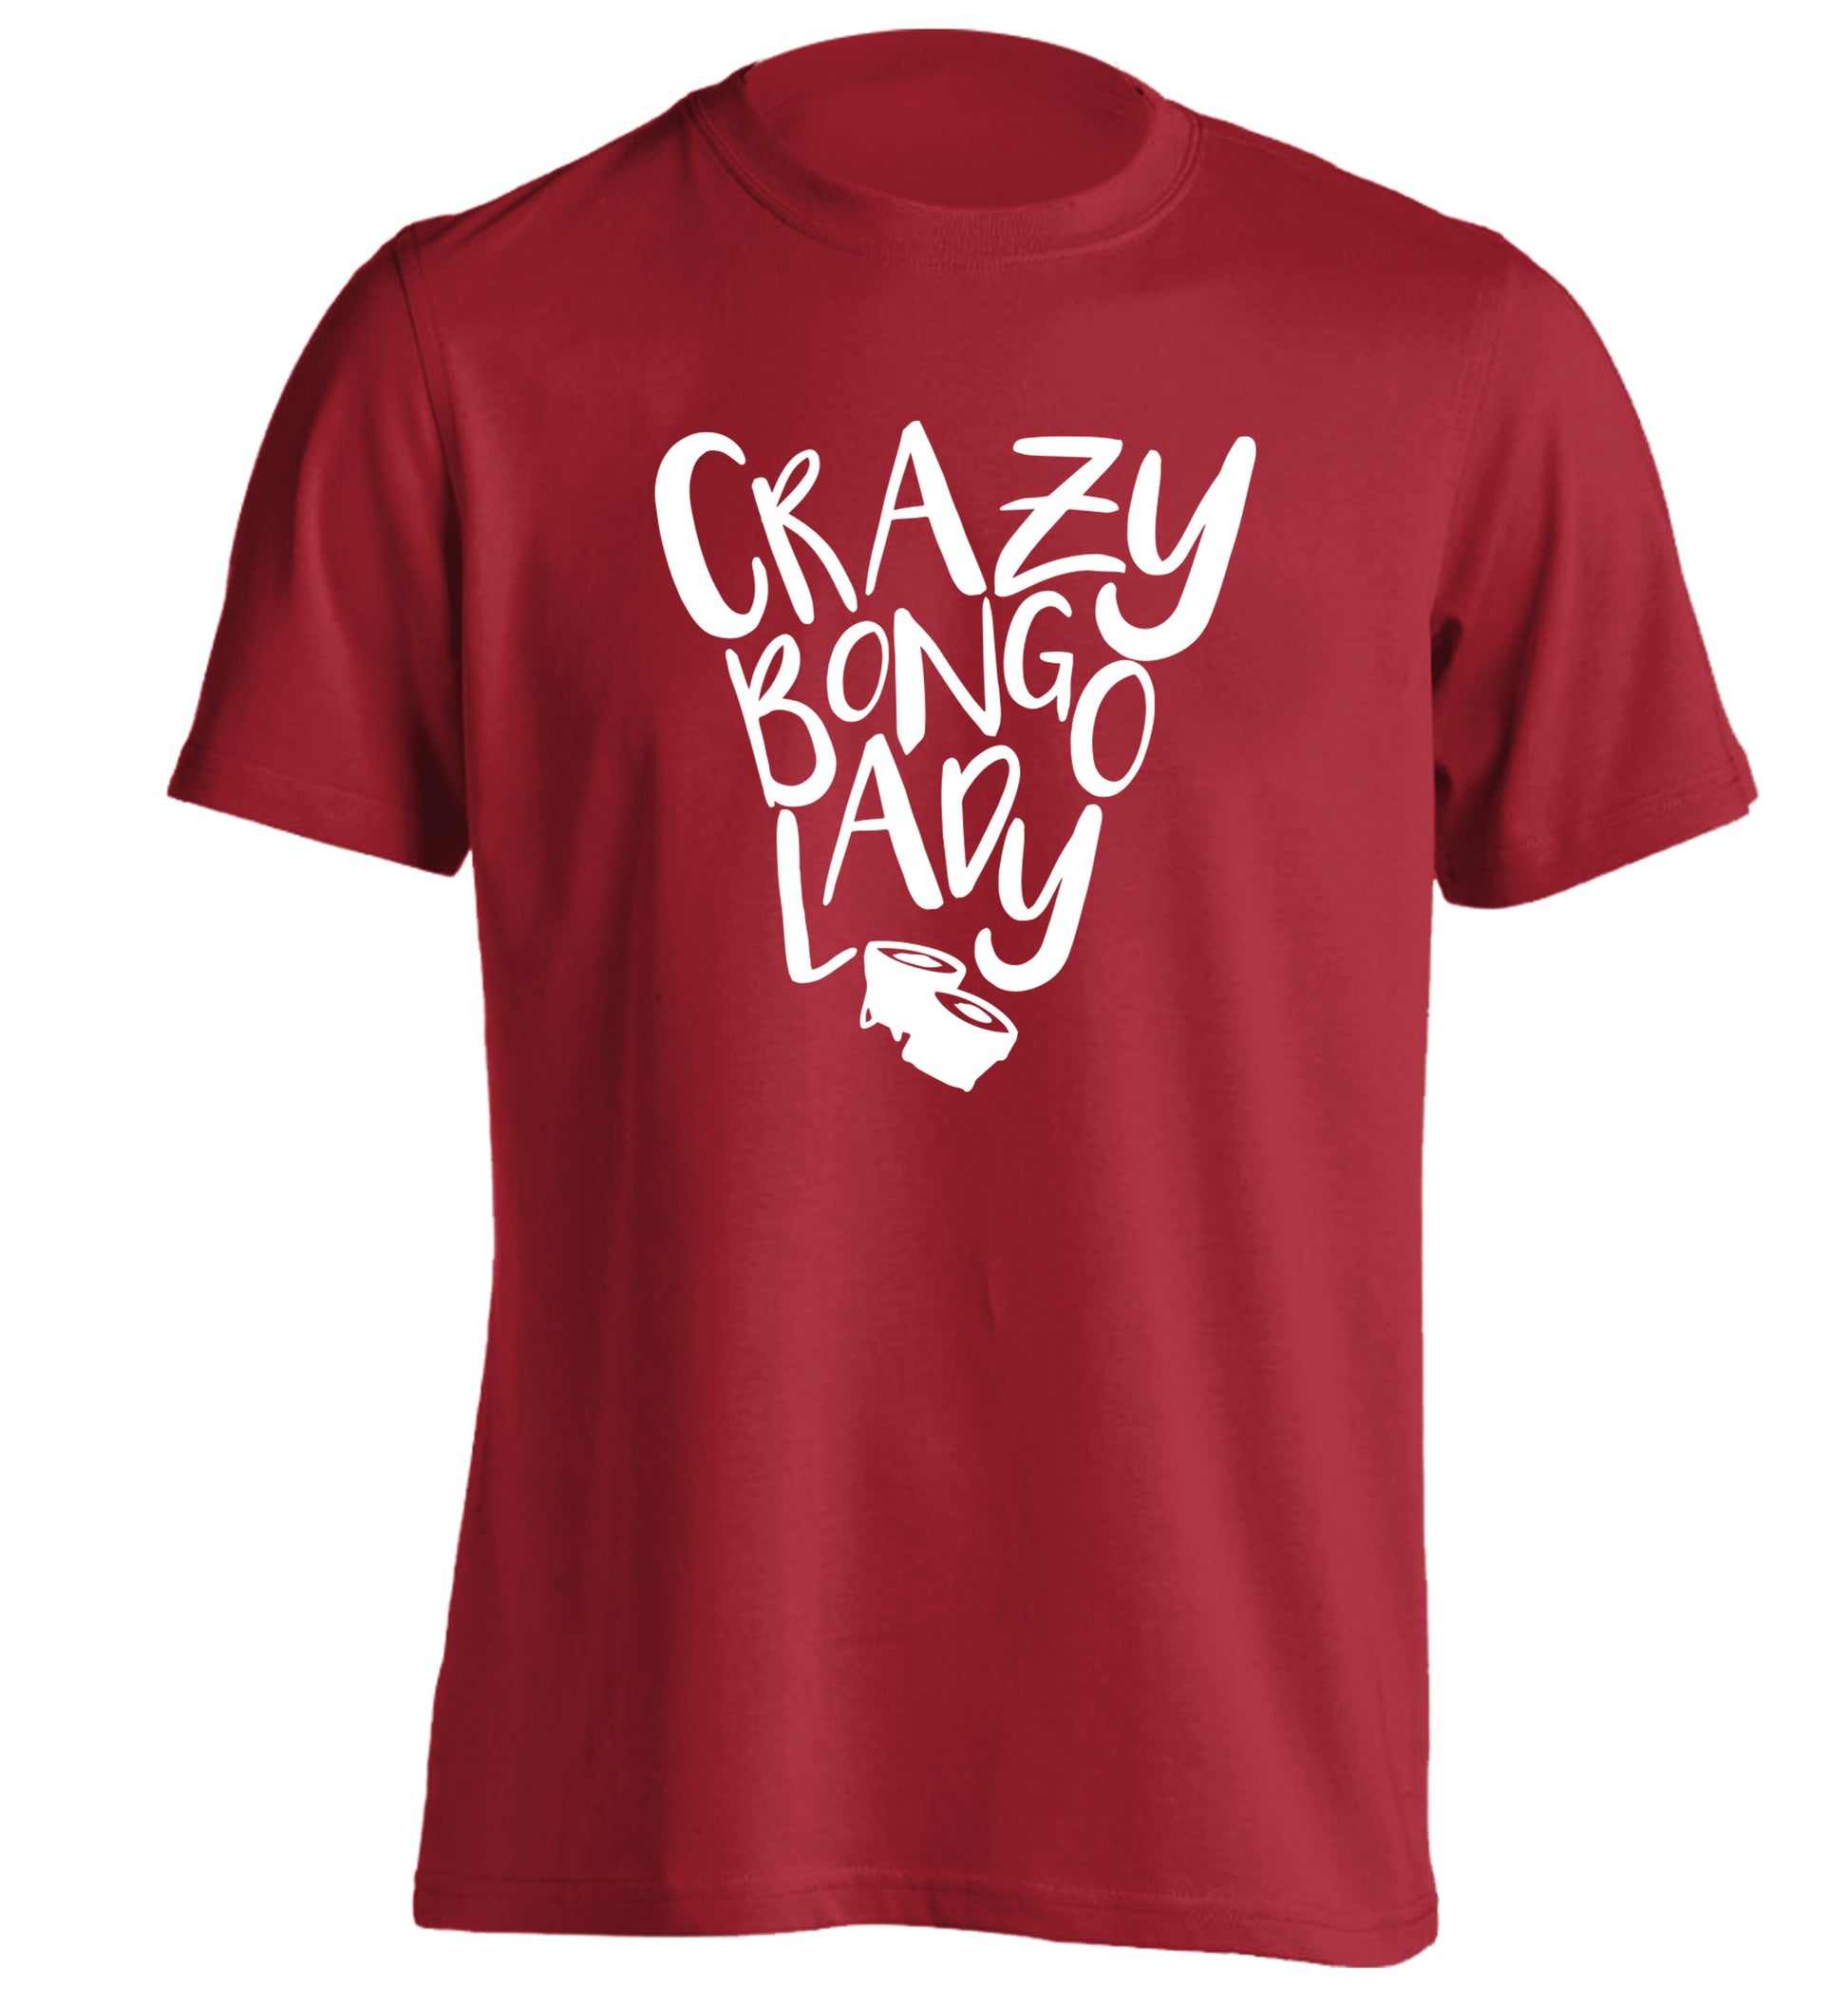 Crazy bongo lady adults unisex red Tshirt 2XL